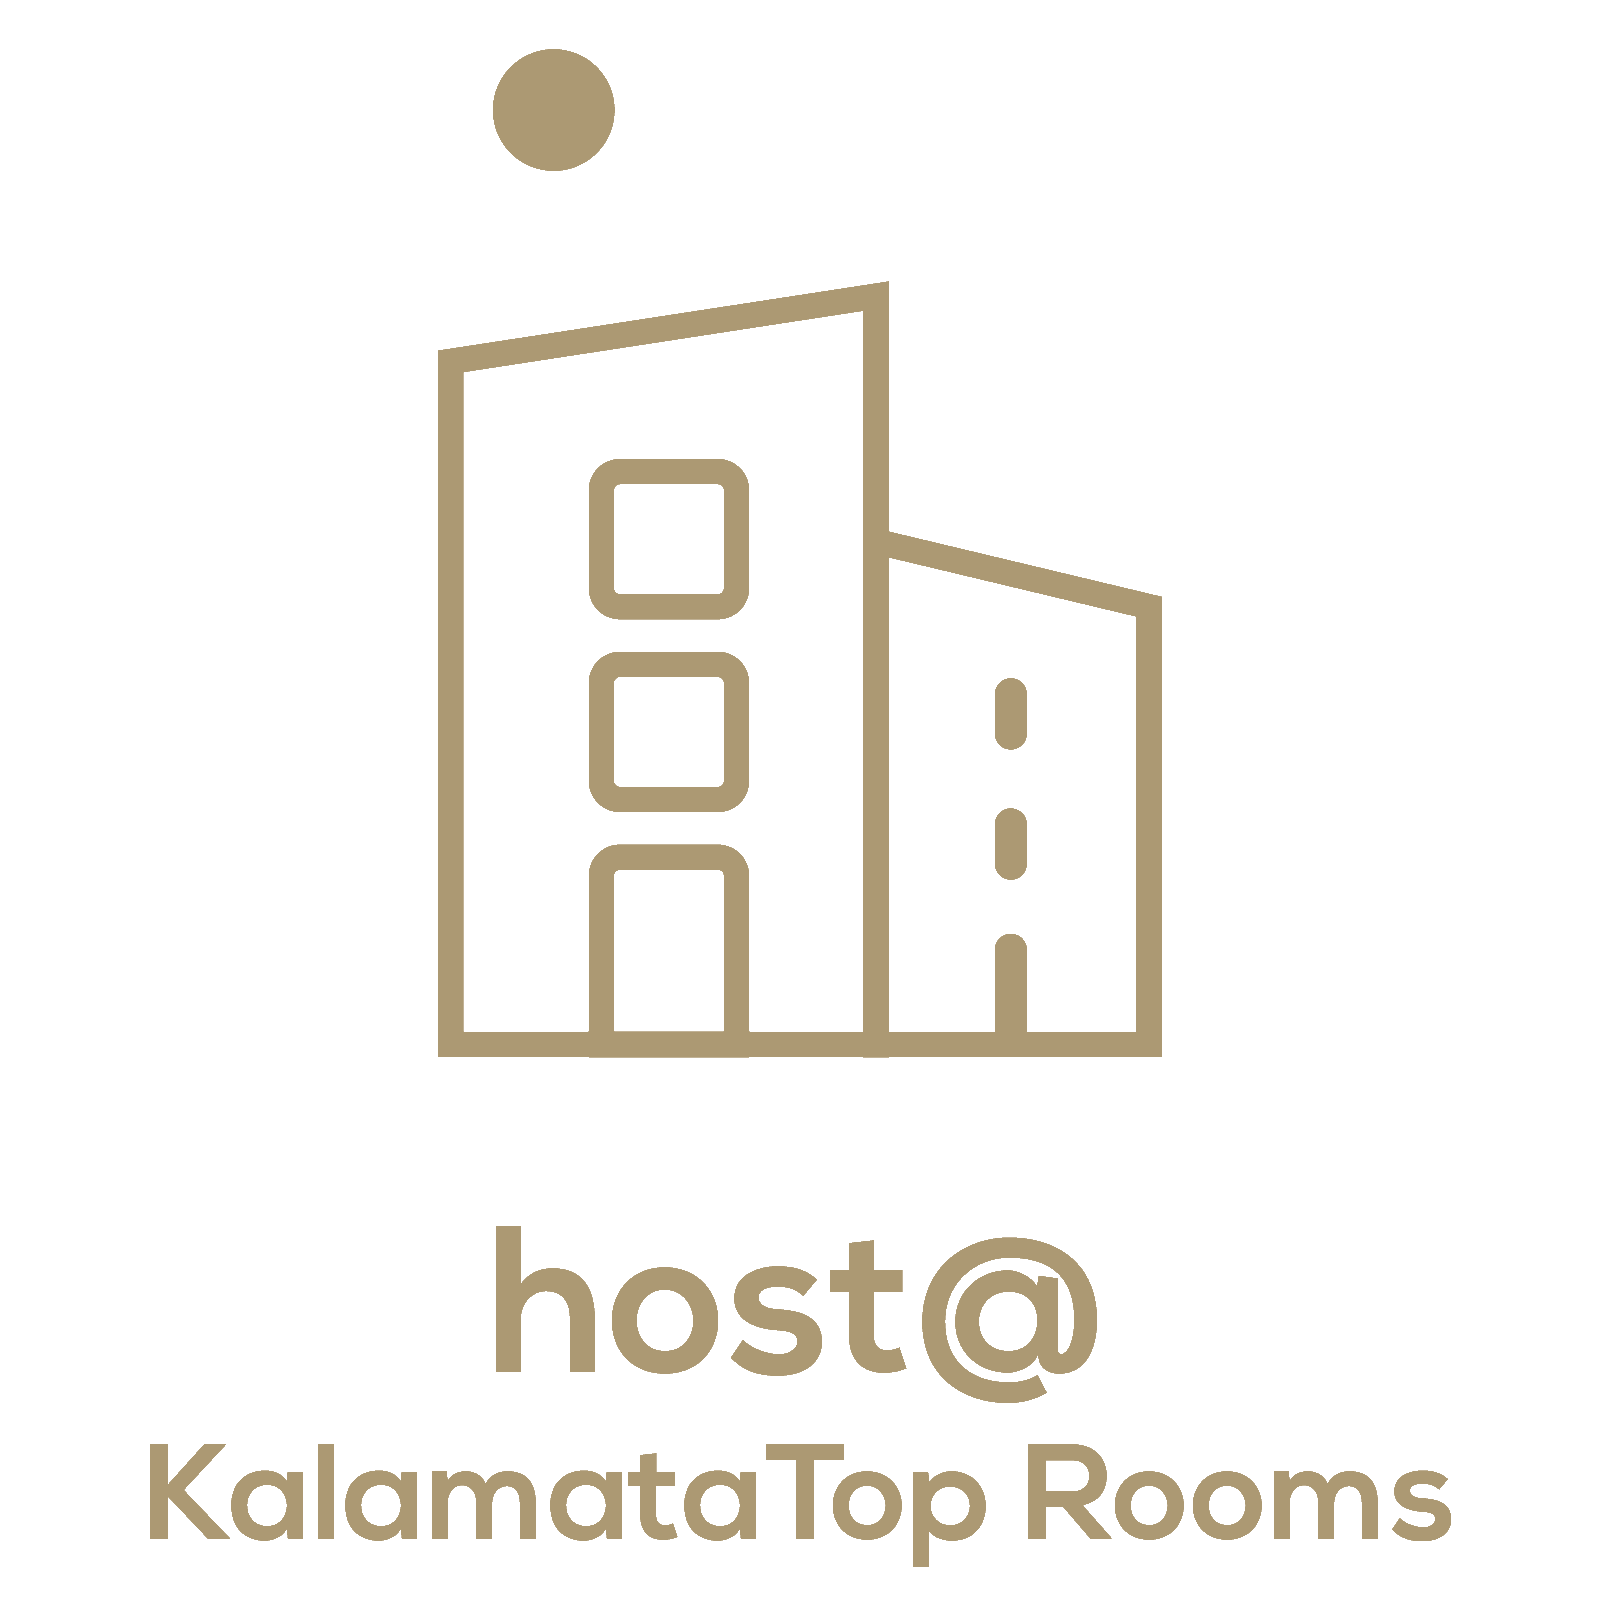 host@Kalamata Top Rooms Logo with sign text transparent with small margin